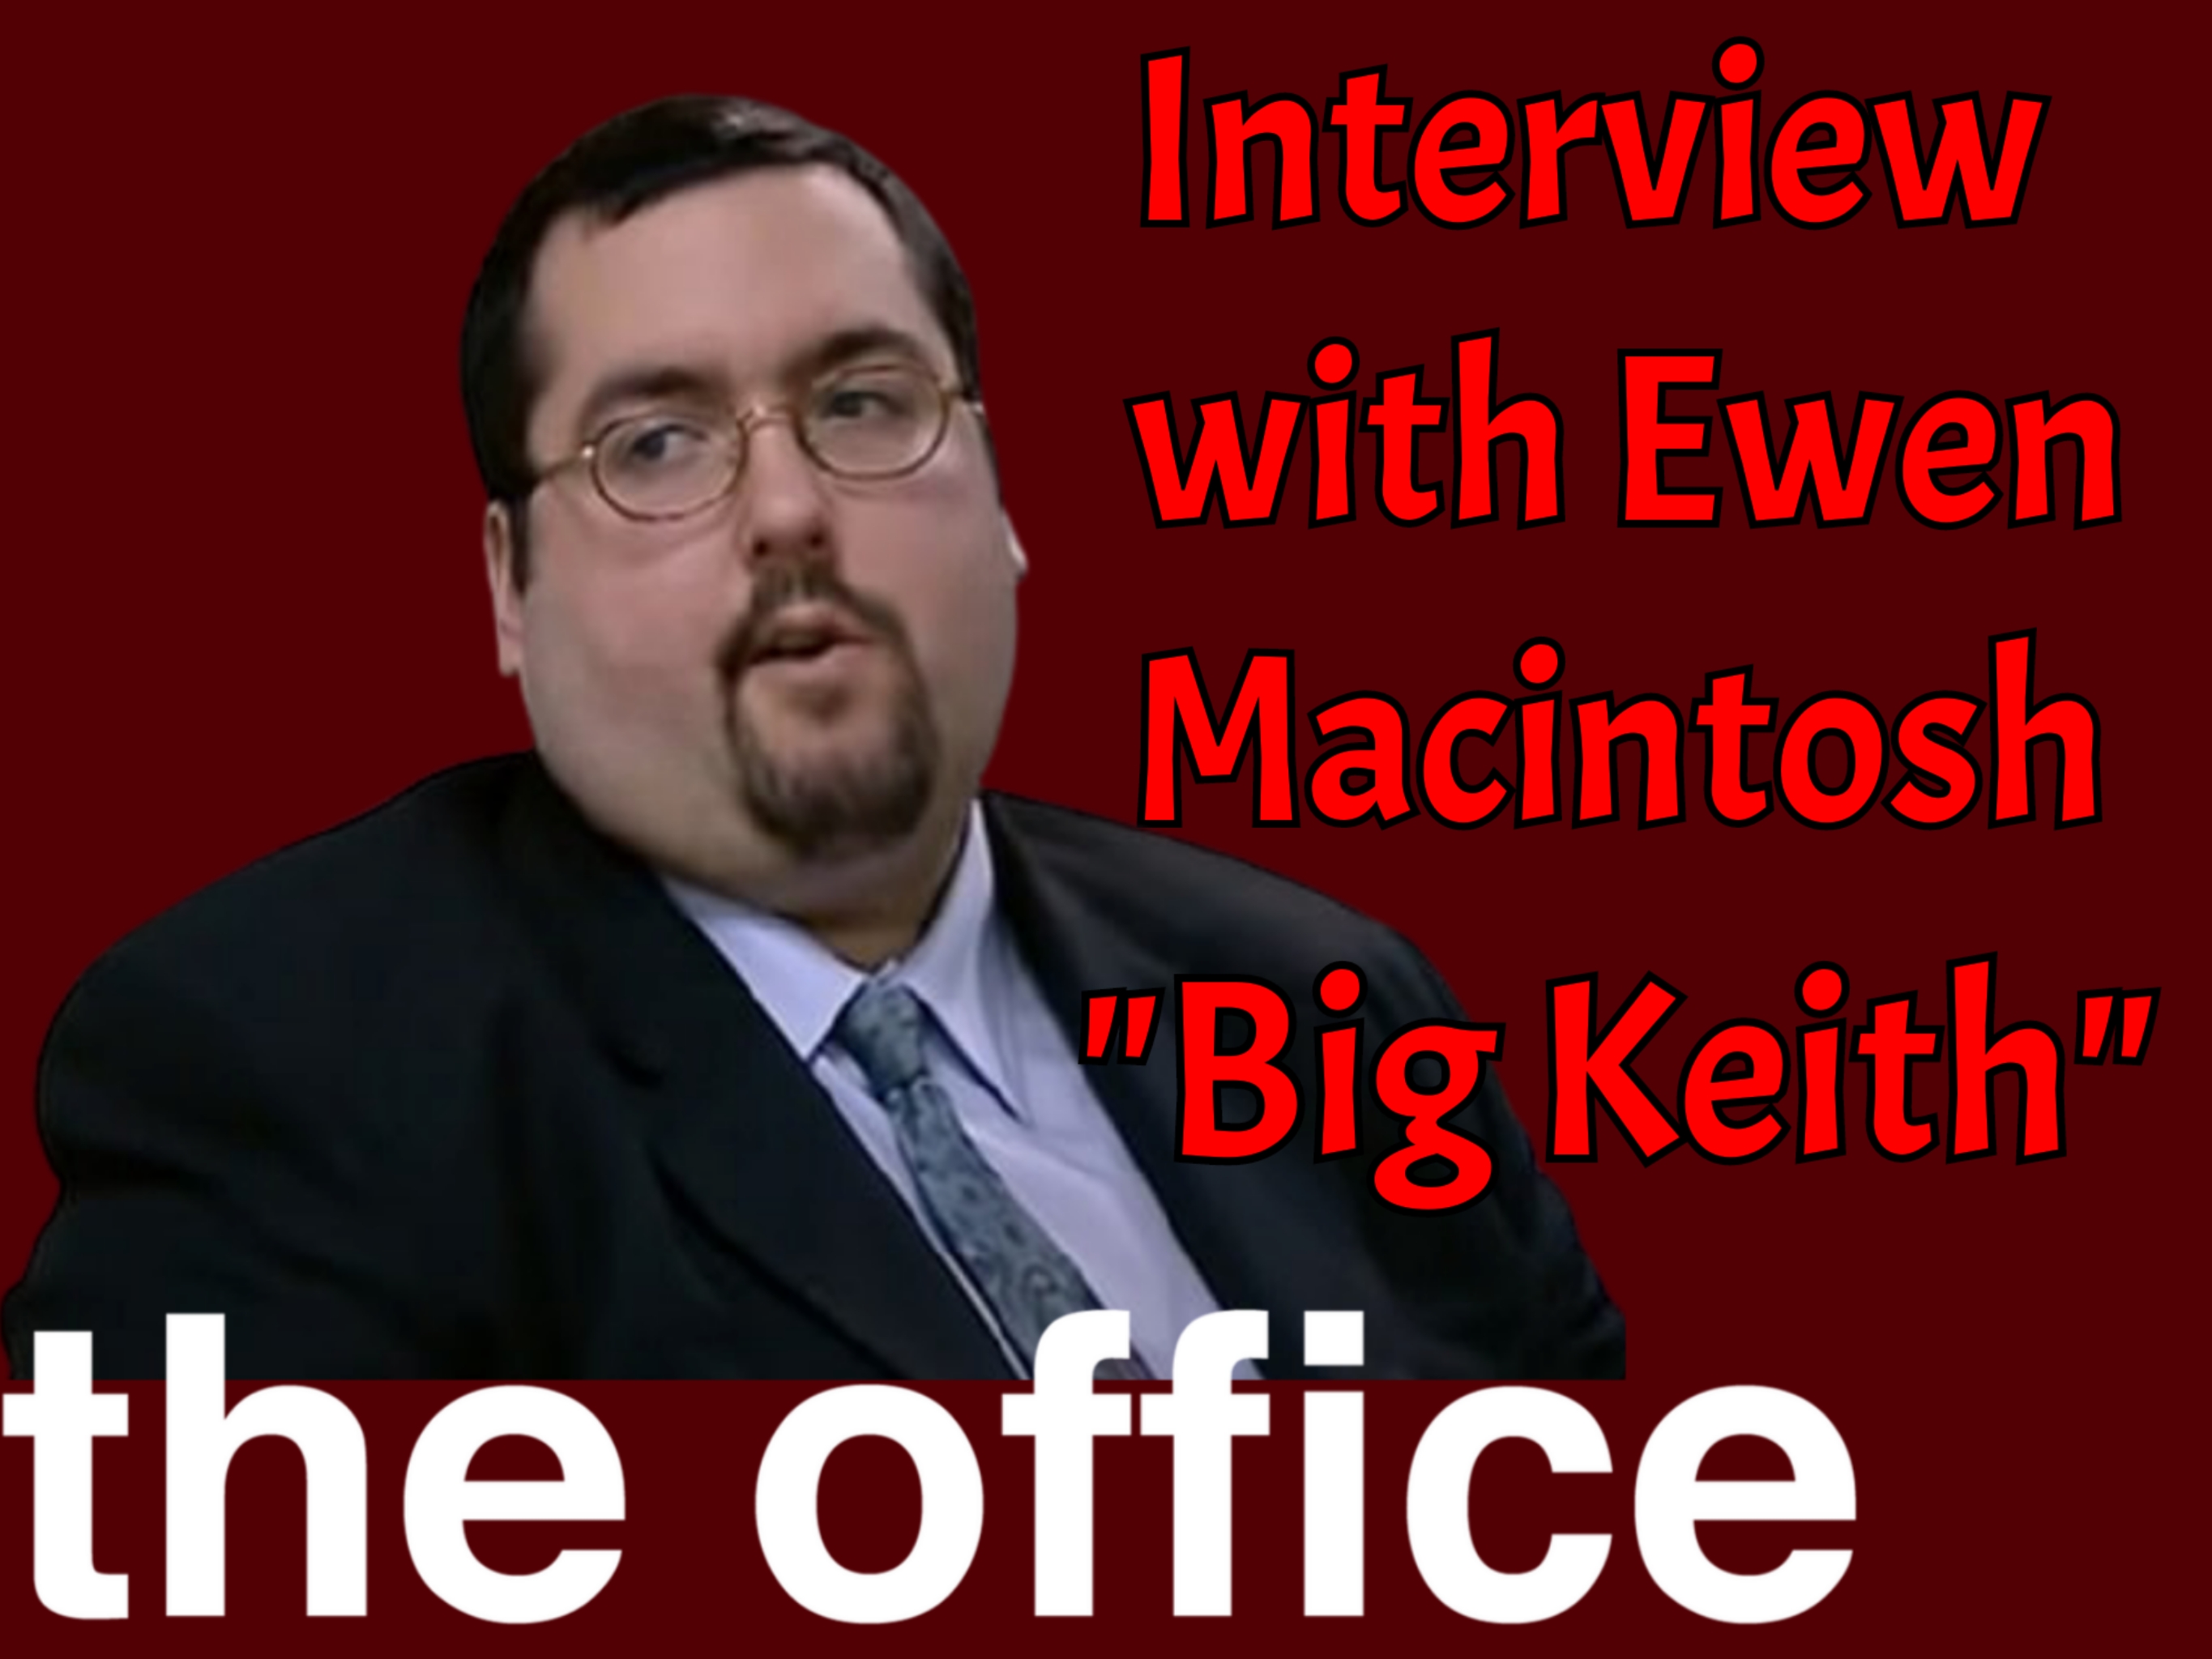 Interview with Ewen Macintosh